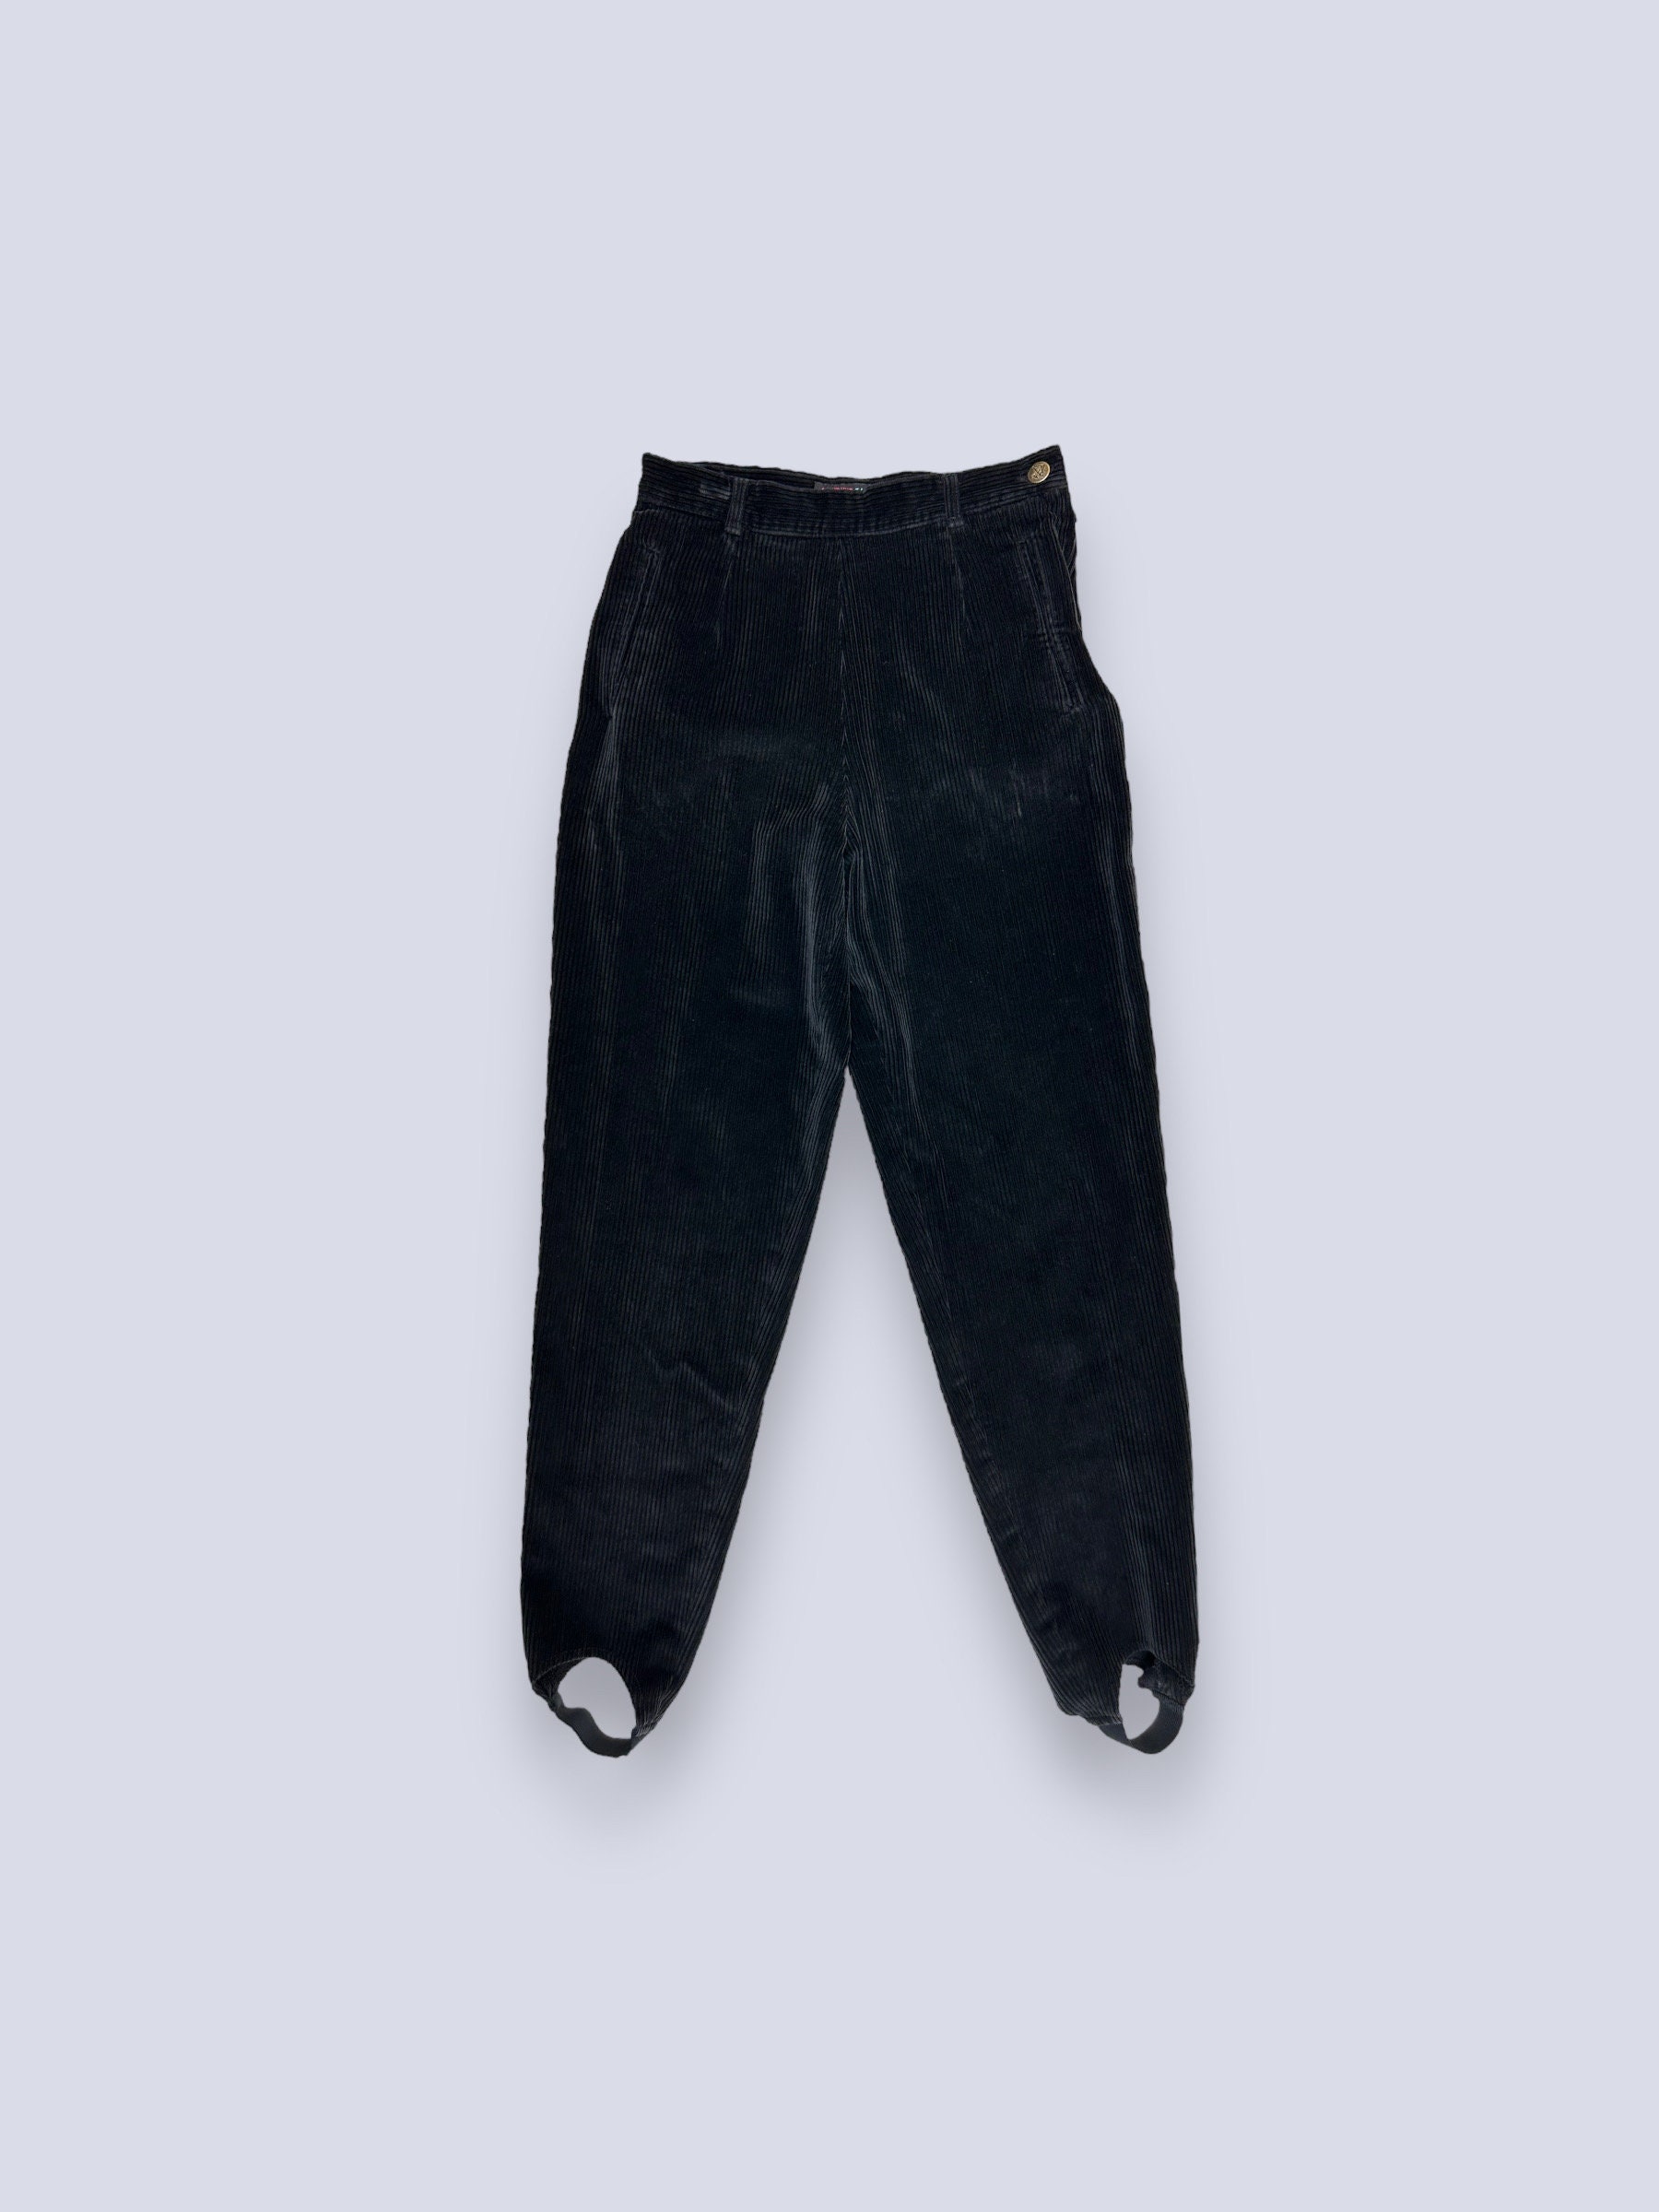 XS-Sm 90s Black High Waisted Ponte Stirrup Pants Petite